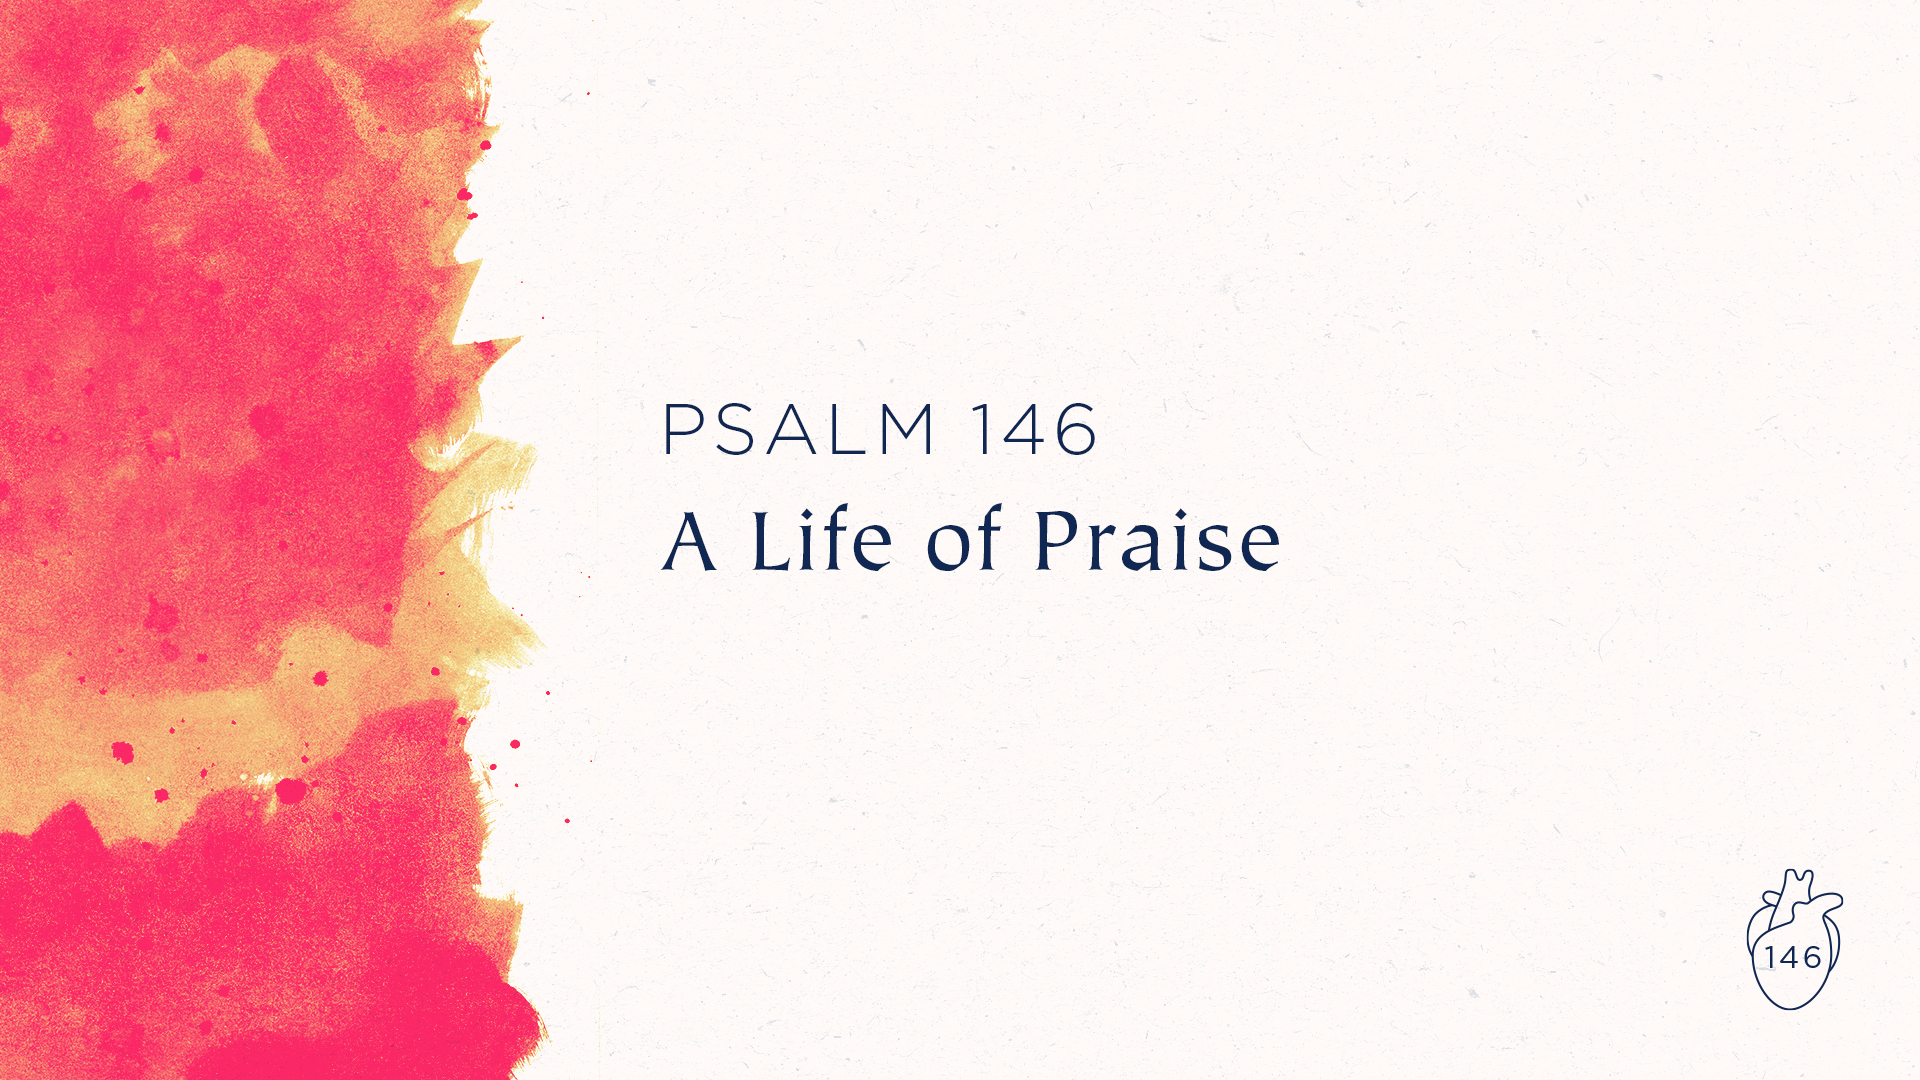 A Life of Praise